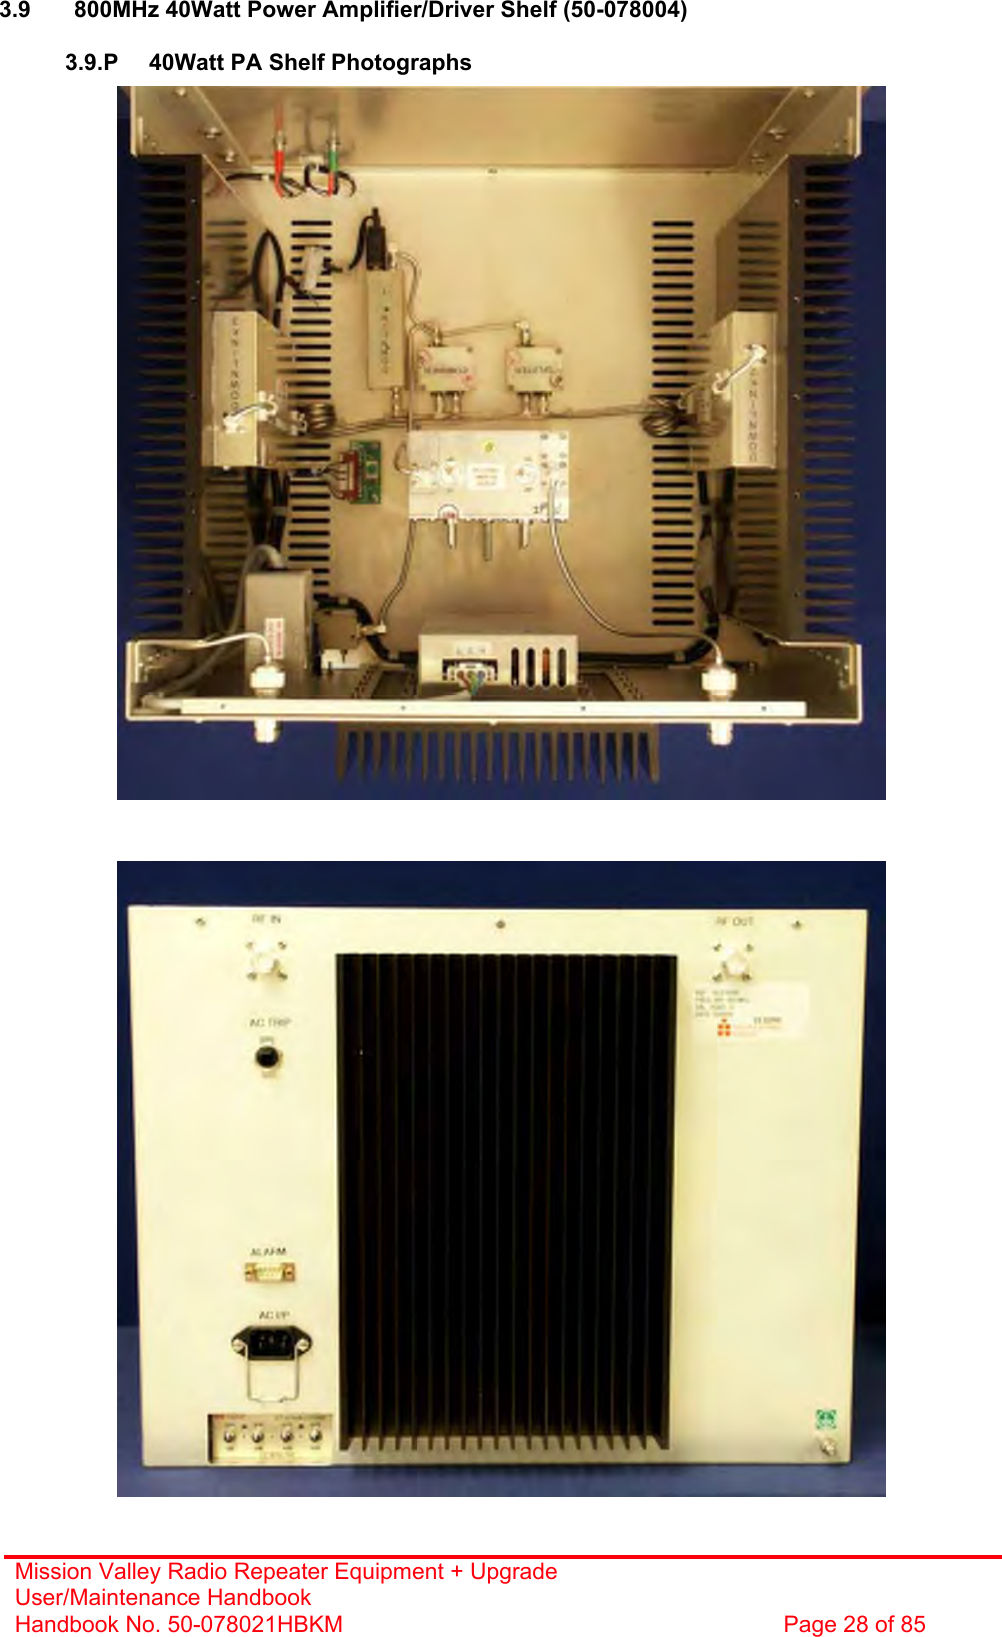 Mission Valley Radio Repeater Equipment + Upgrade User/Maintenance Handbook Handbook No. 50-078021HBKM  Page 28 of 85   3.9  800MHz 40Watt Power Amplifier/Driver Shelf (50-078004)  3.9.P  40Watt PA Shelf Photographs                                                      